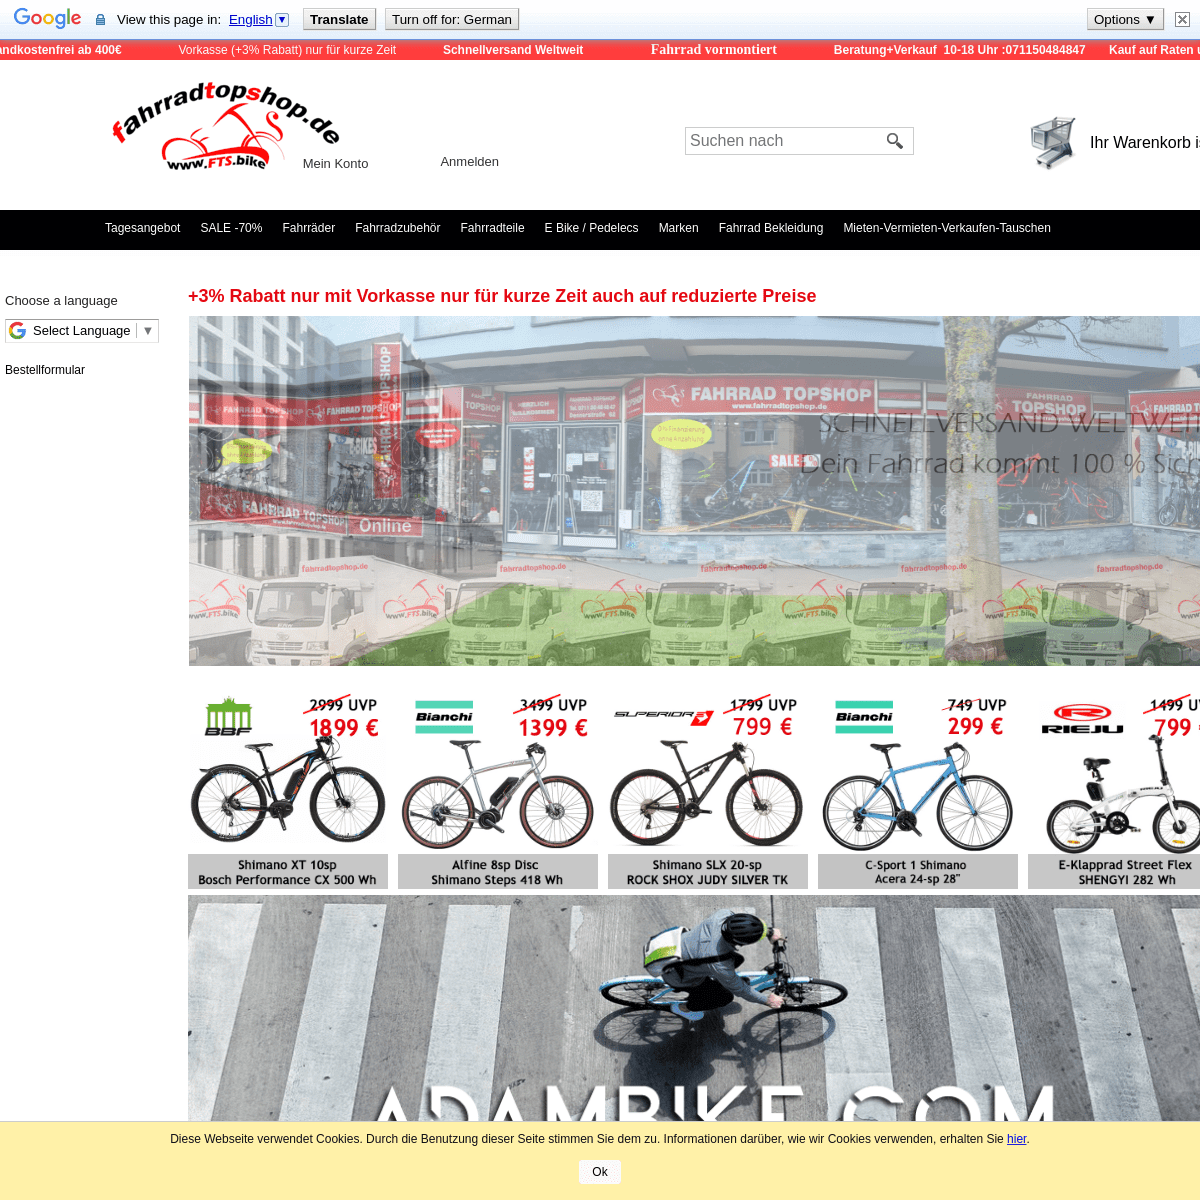 A complete backup of fahrradtopshop.de